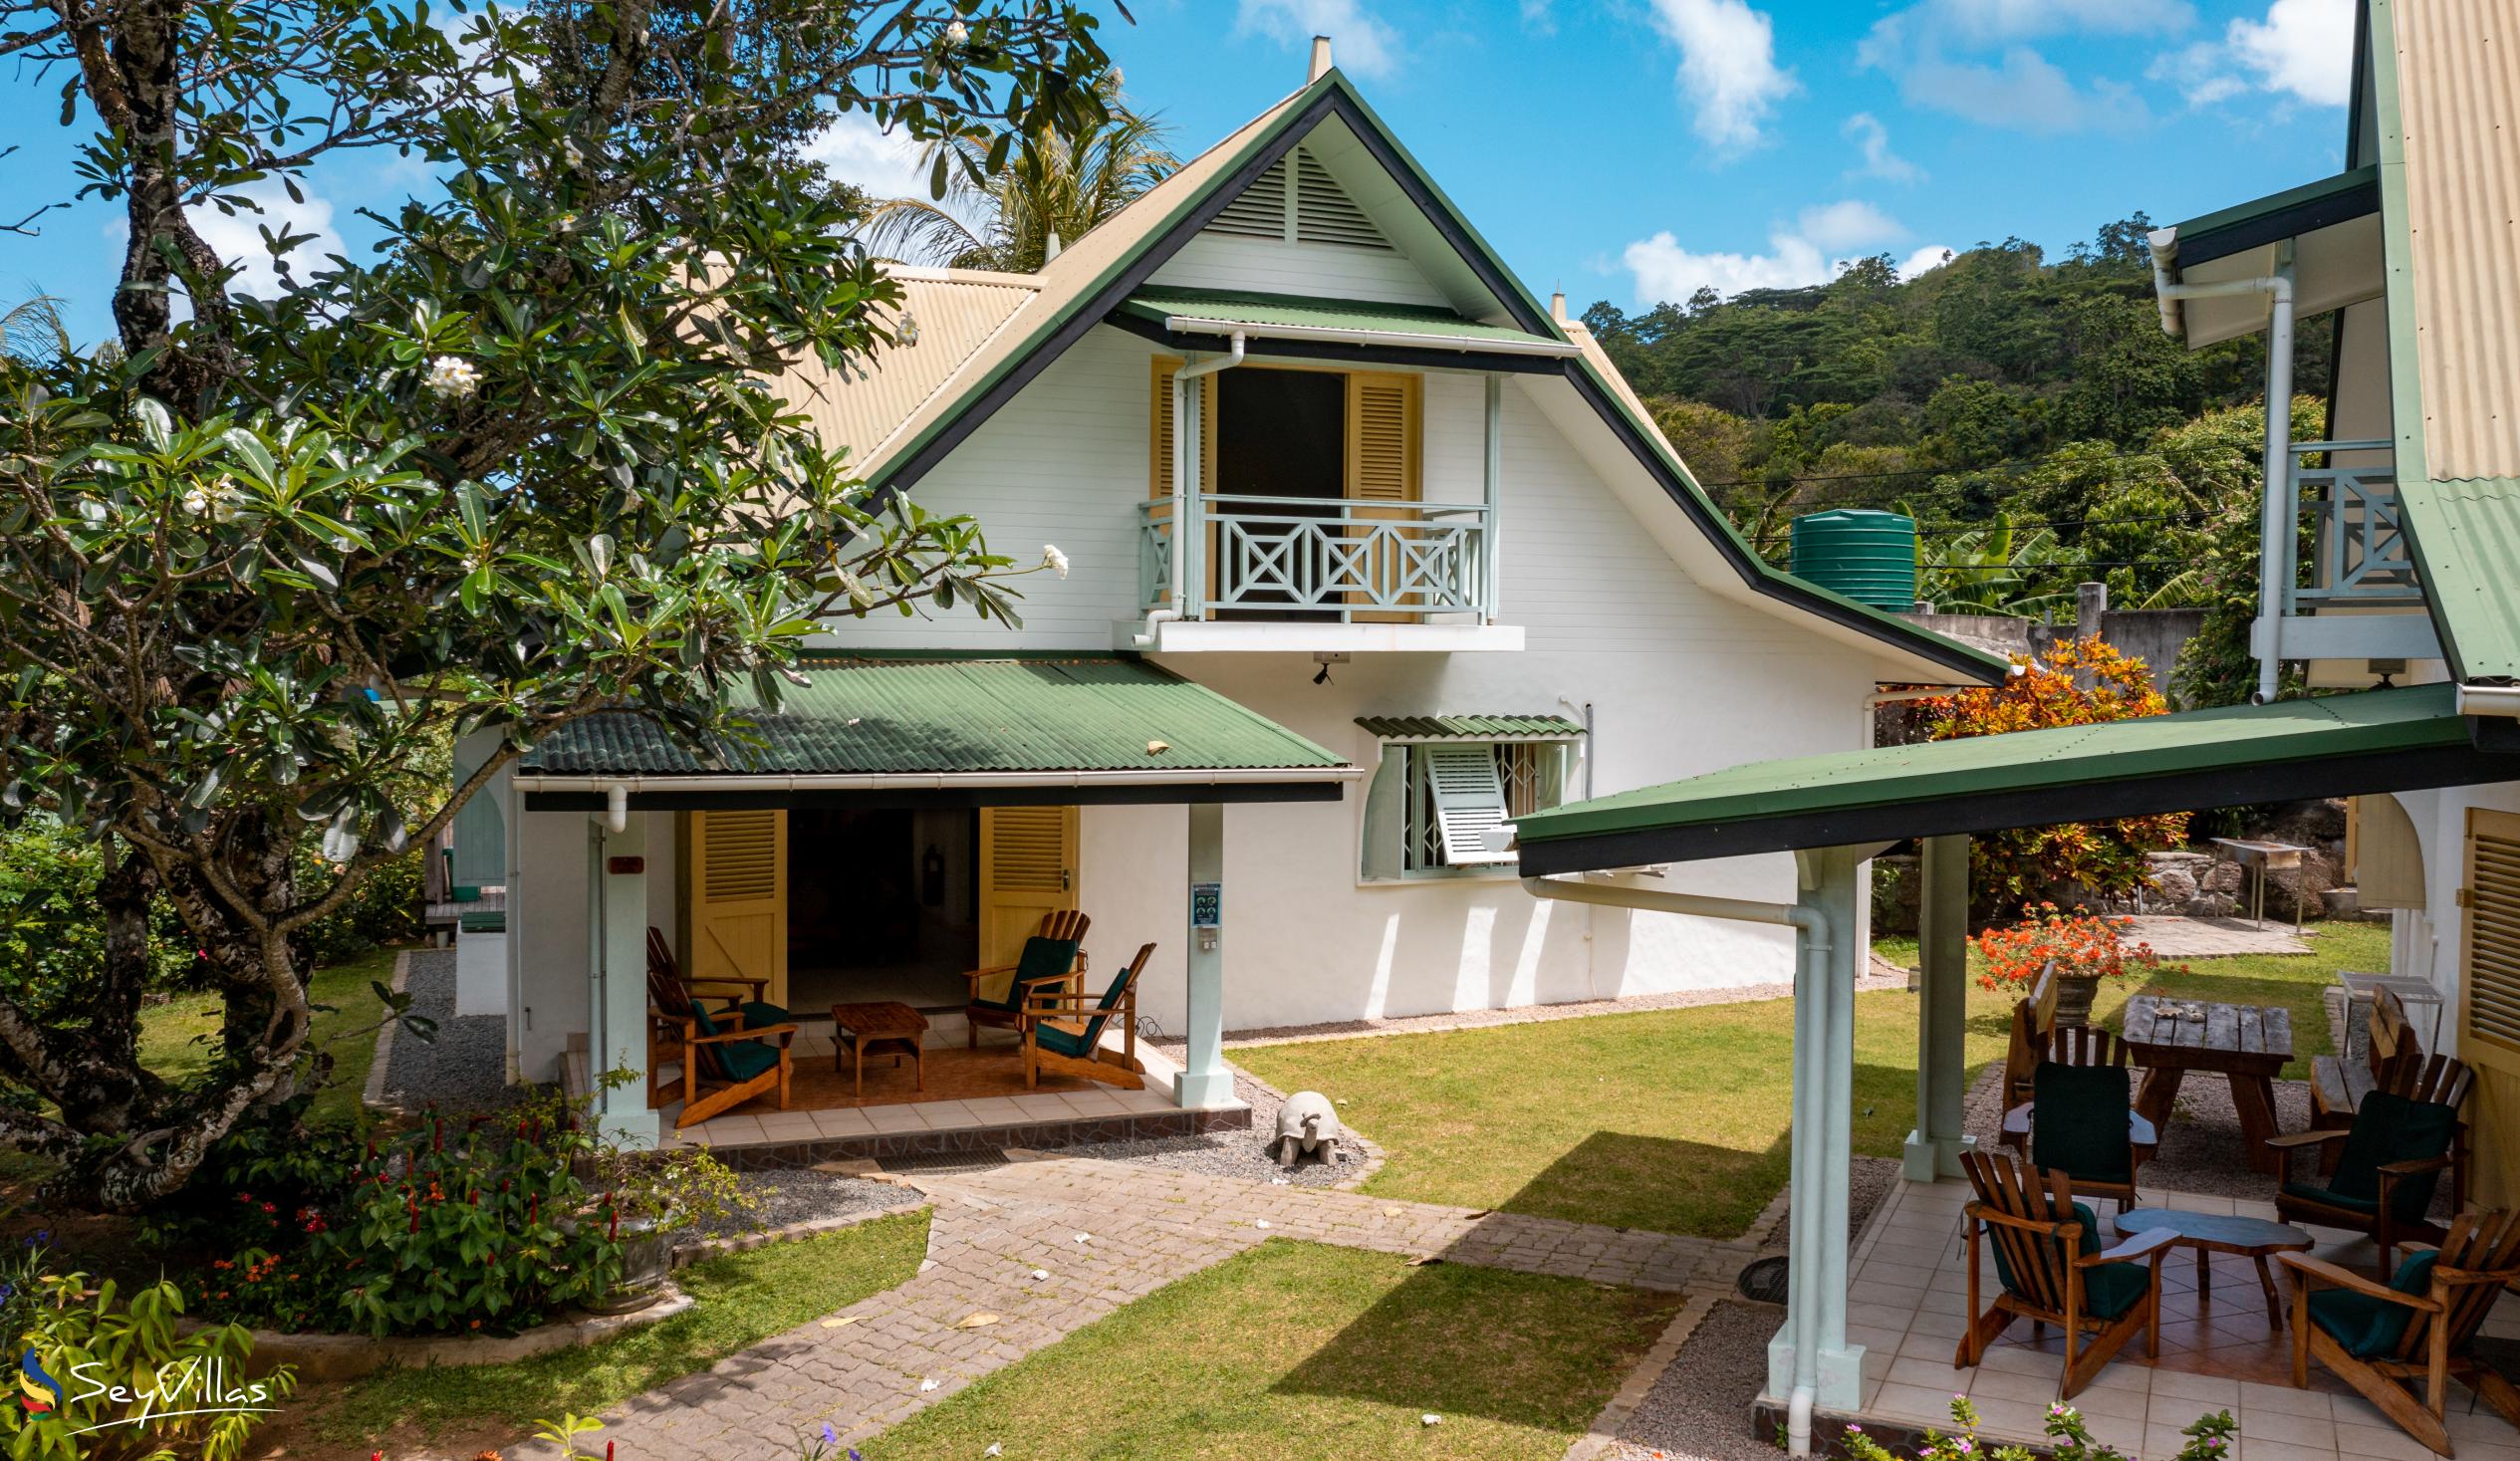 Foto 13: Villa Kordia - Aussenbereich - Mahé (Seychellen)